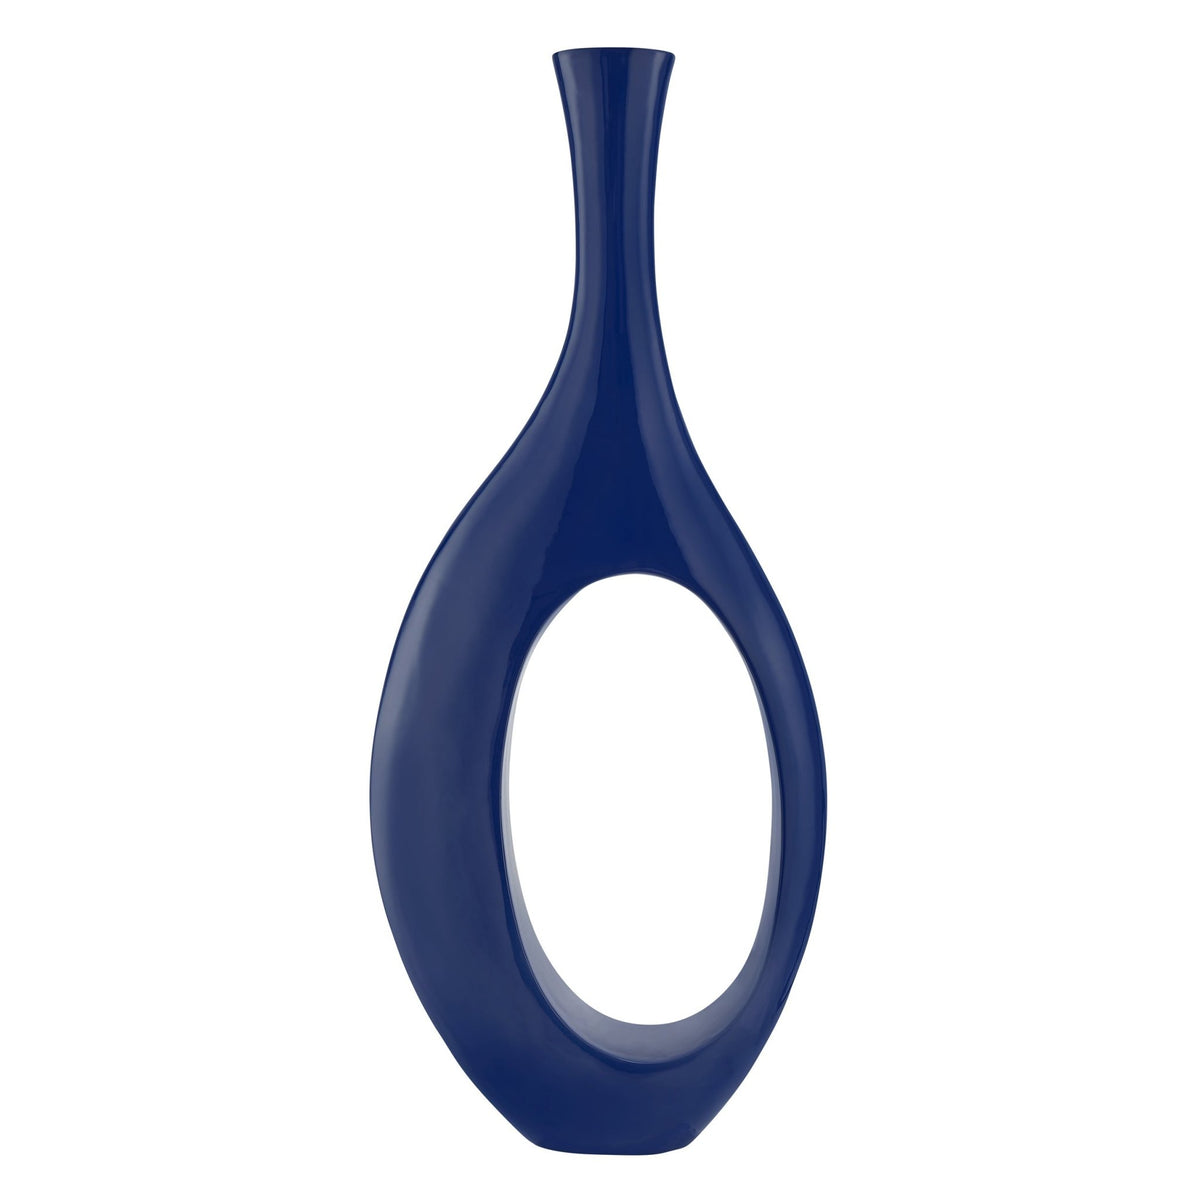 Finesse Decor Trombone Vase in Navy Blue / Small